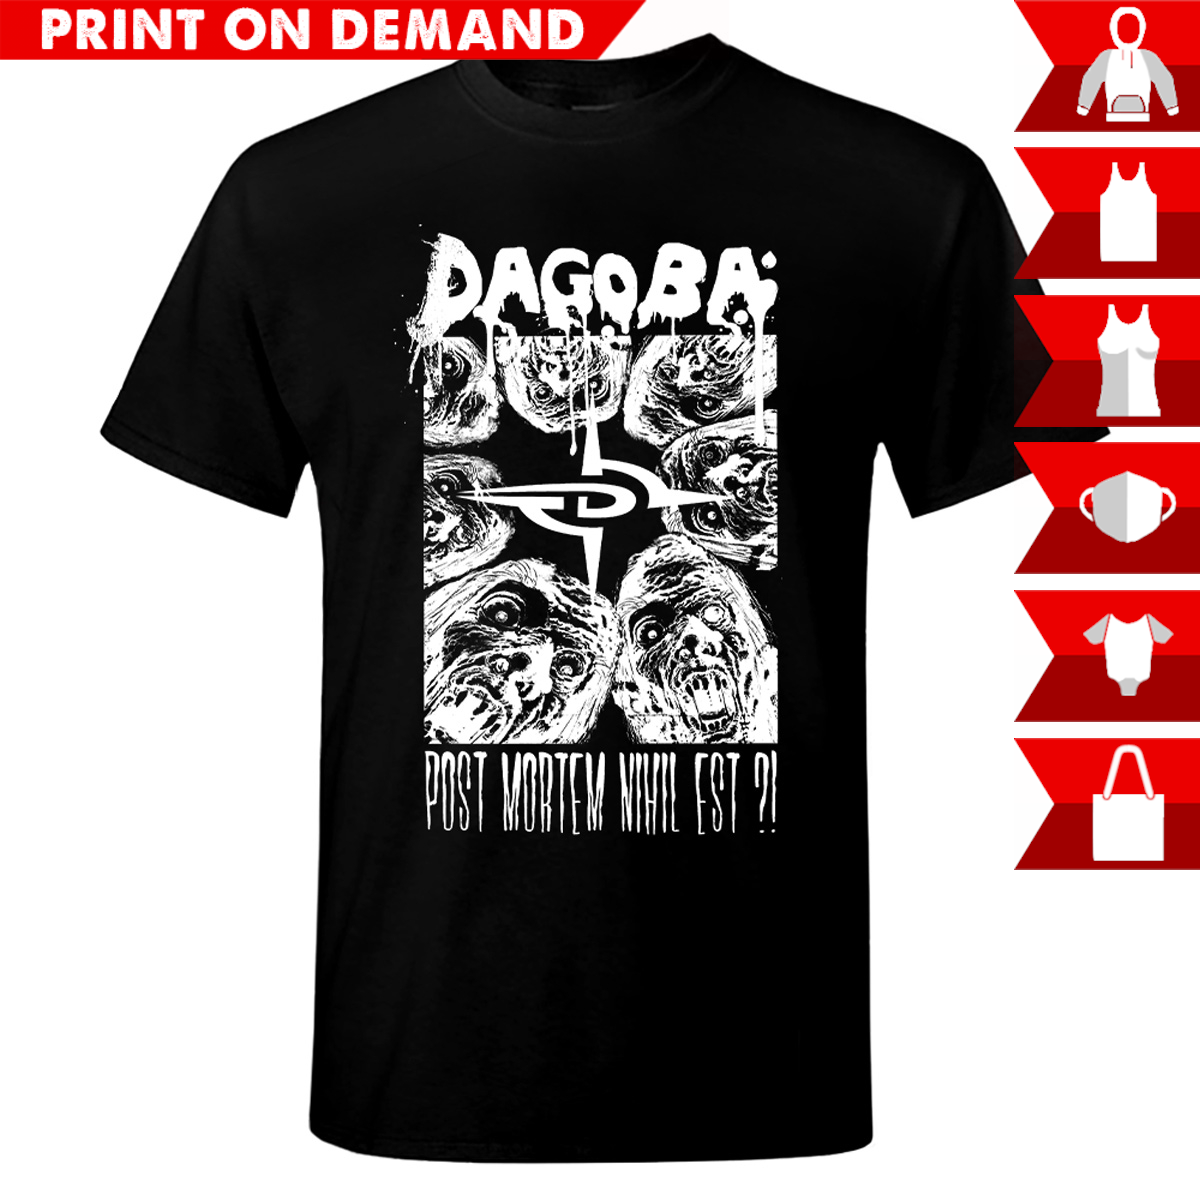 Dagoba - White Zombie - Print on demand